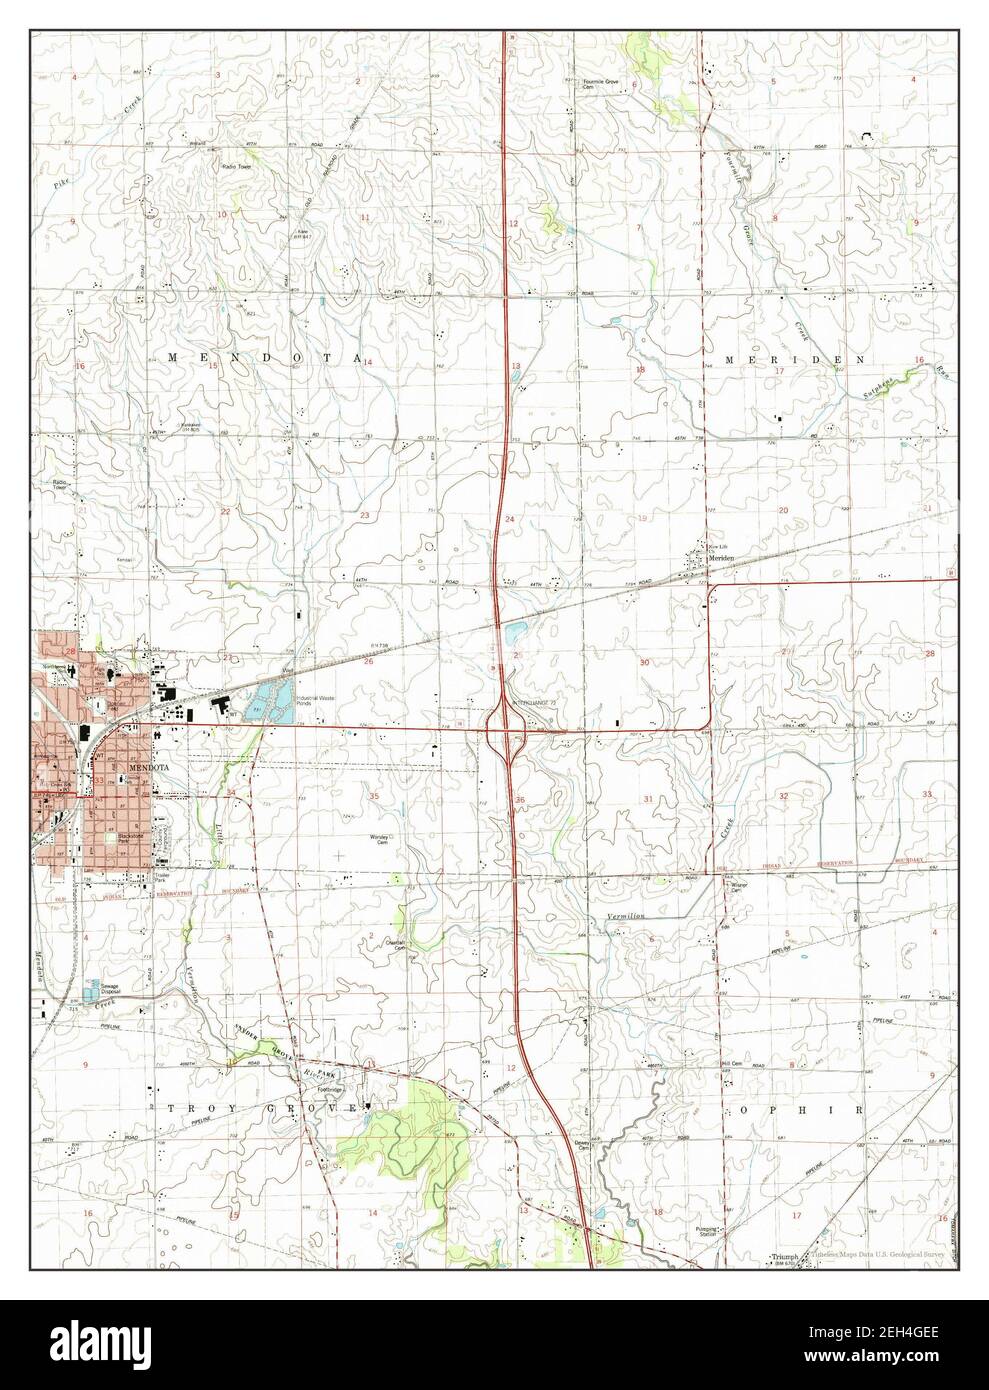 Mendota East, Illinois, map 1993, 1:24000, United States of America by Timeless Maps, data U.S. Geological Survey Stock Photo